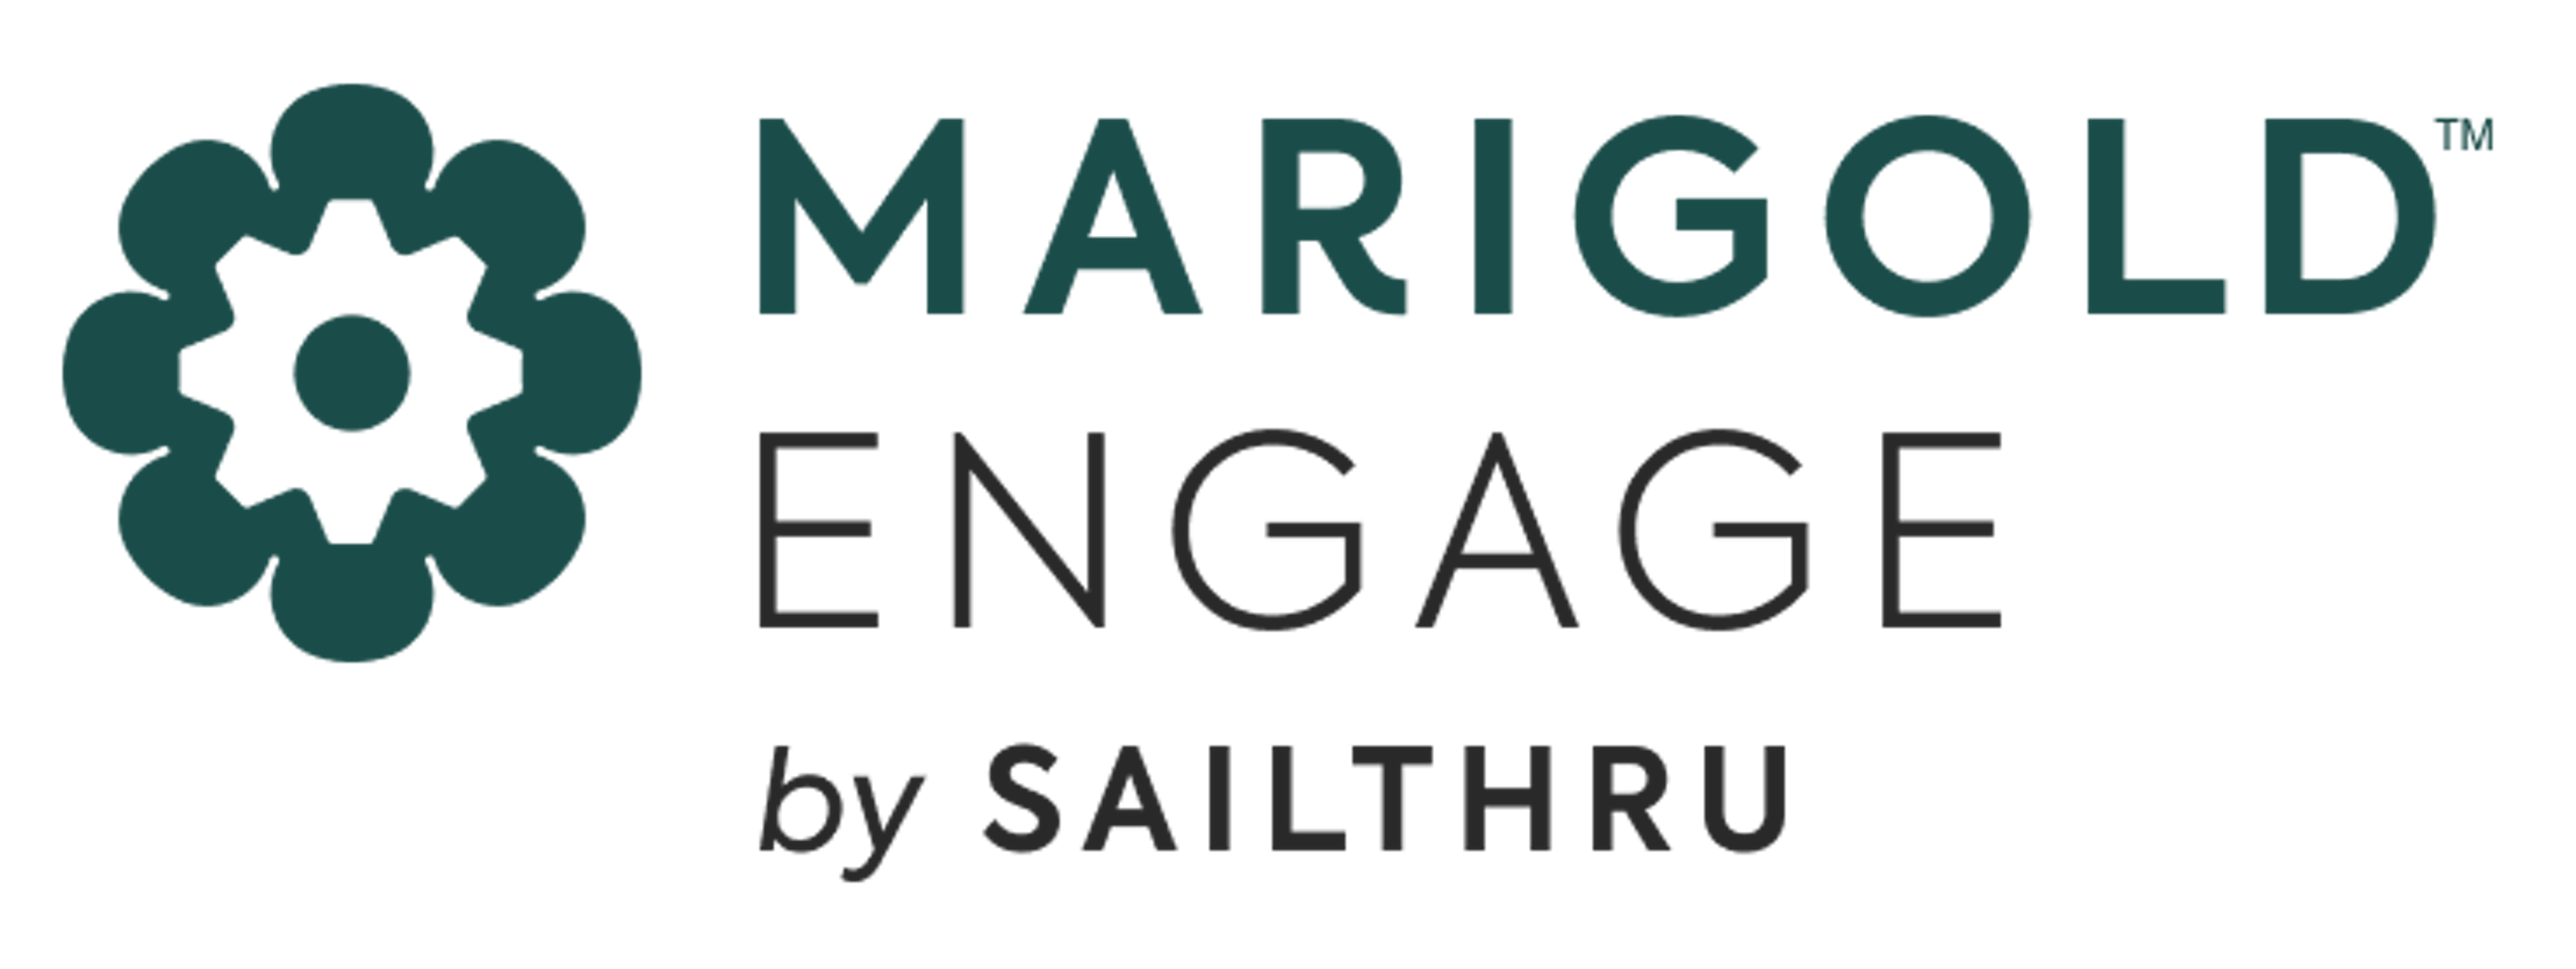 Marigold Engage by Sailthru Logo